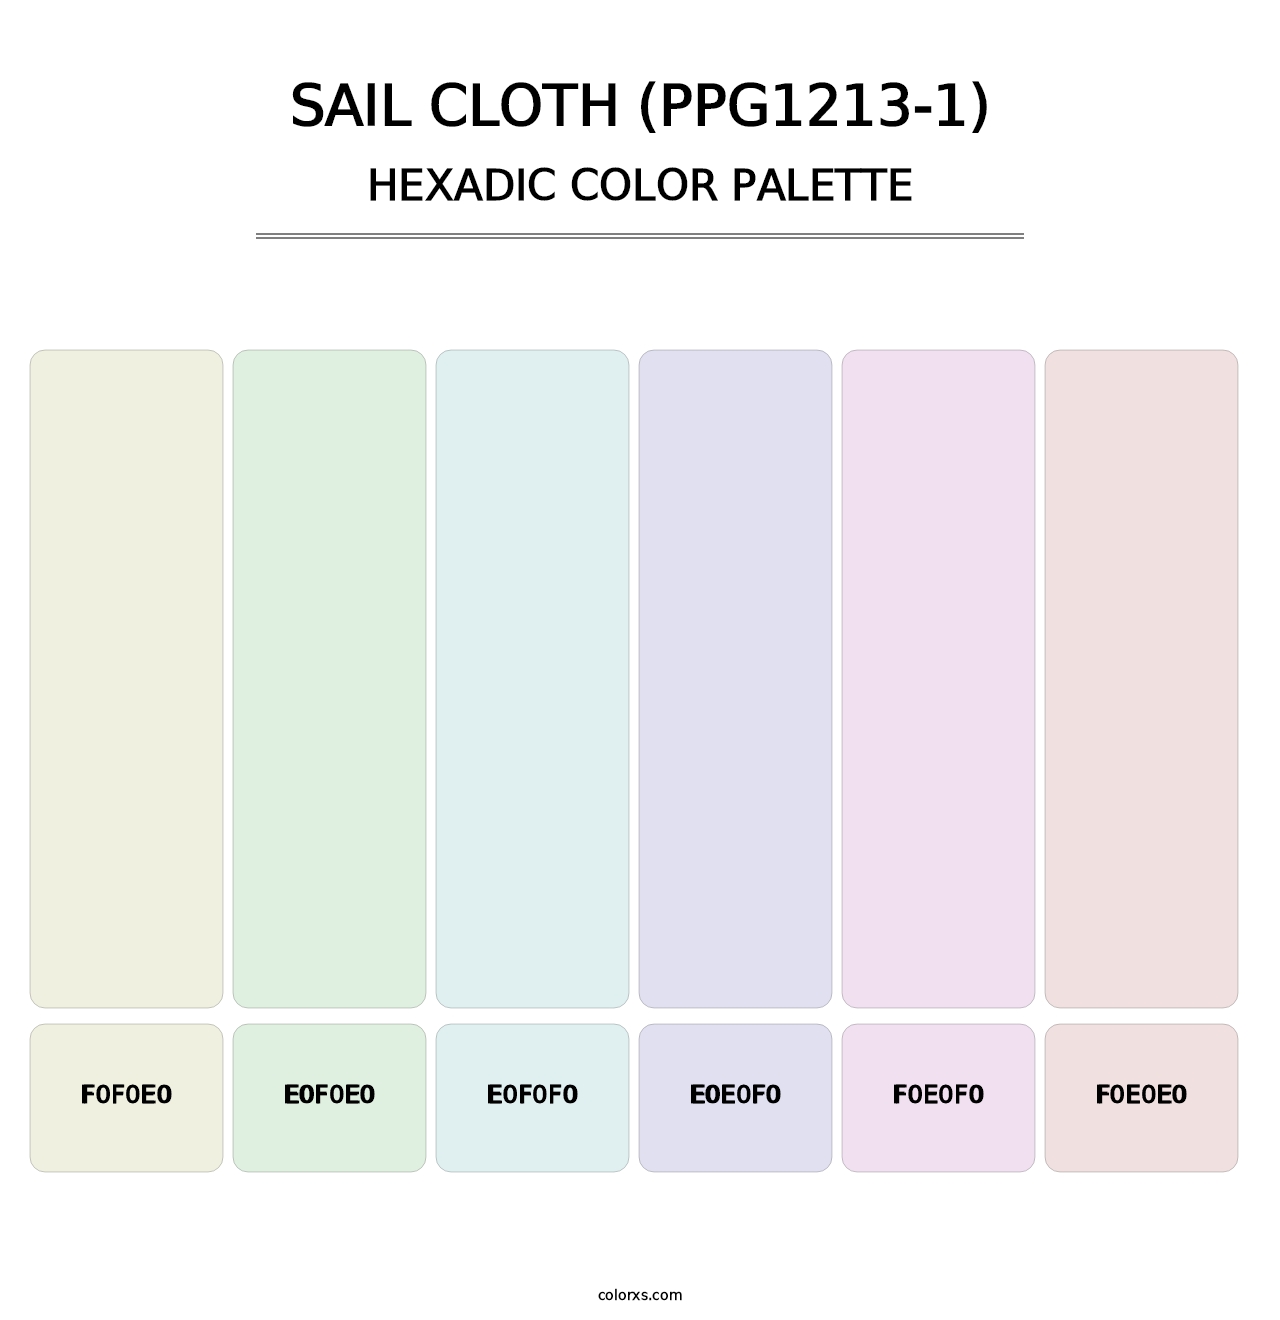 Sail Cloth (PPG1213-1) - Hexadic Color Palette